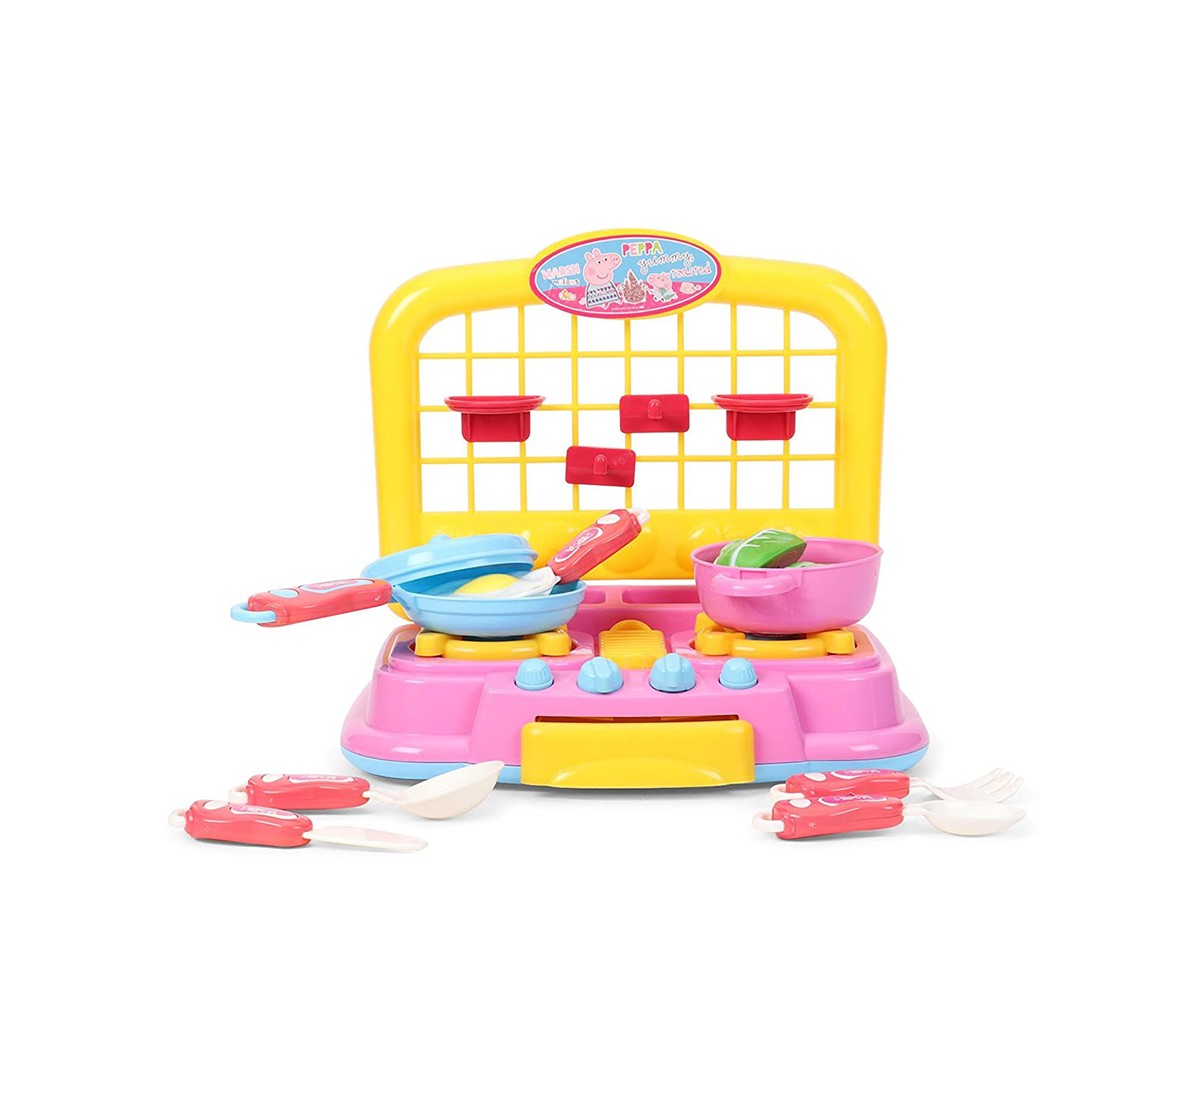 Peppa Pig Kitchen Set Kitchen Sets & Appliances for Kids age 3Y+ 